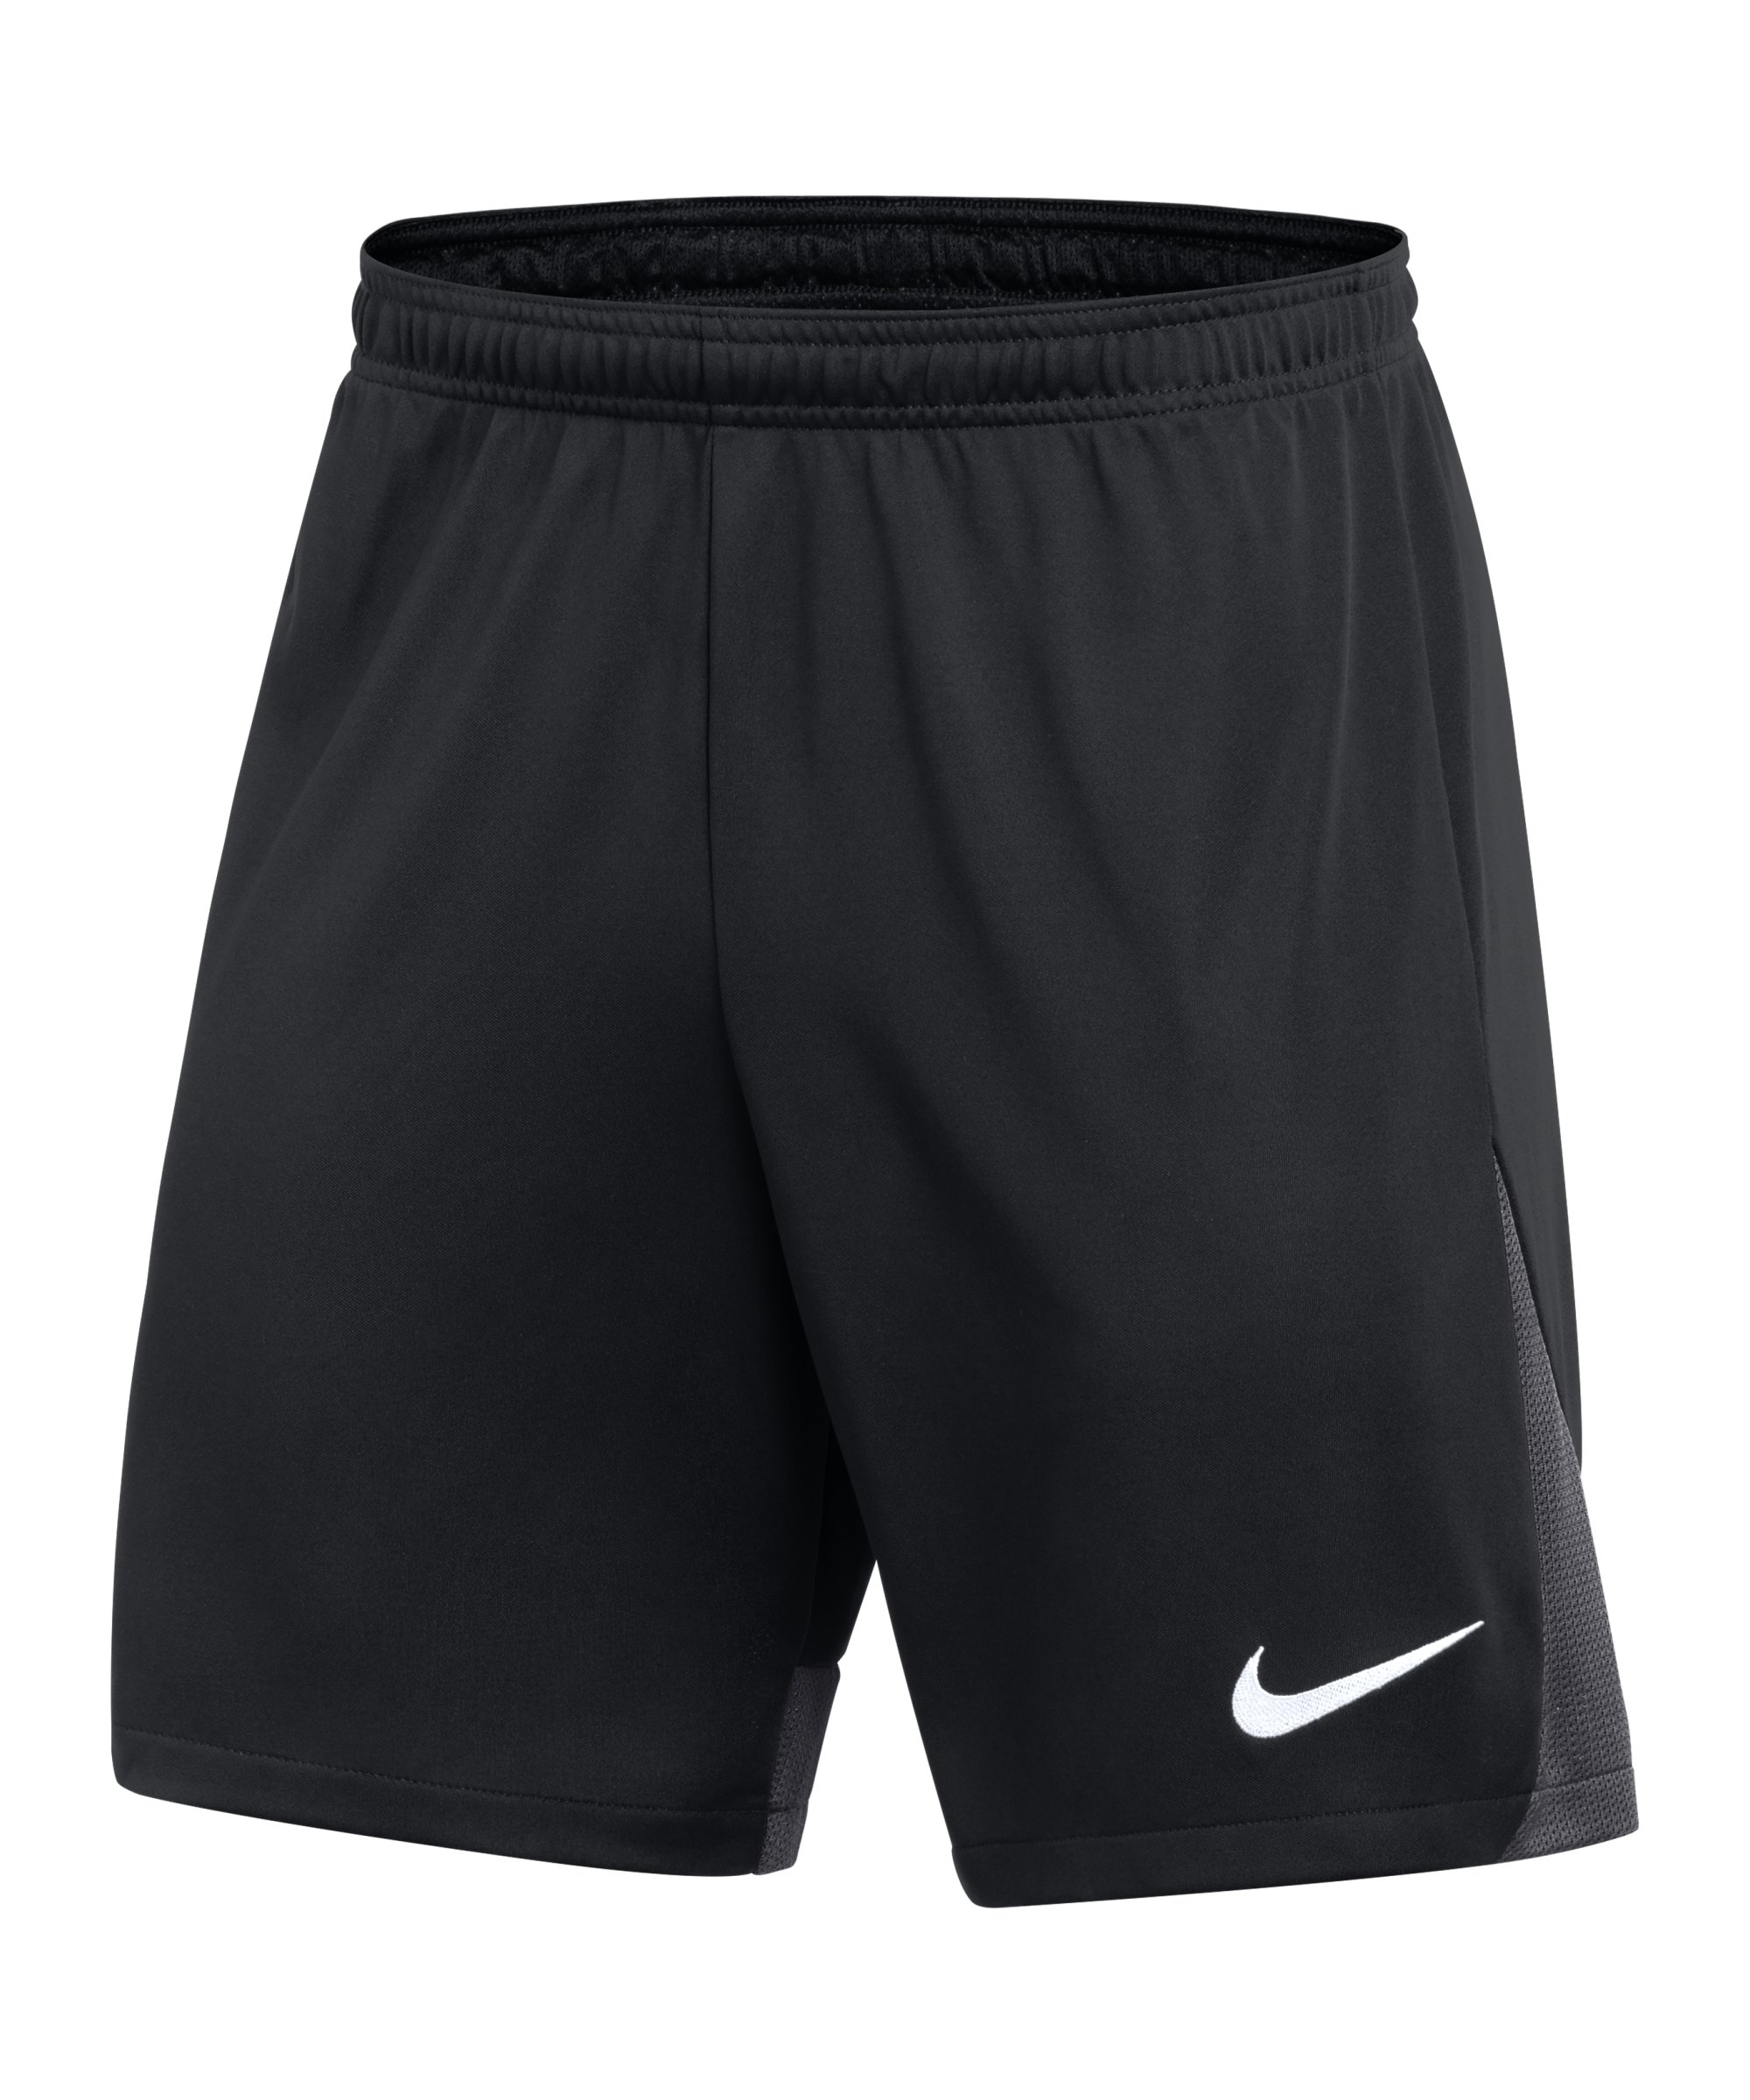 Nike Academy Pro Training Short Schwarz Grau F014 - schwarz